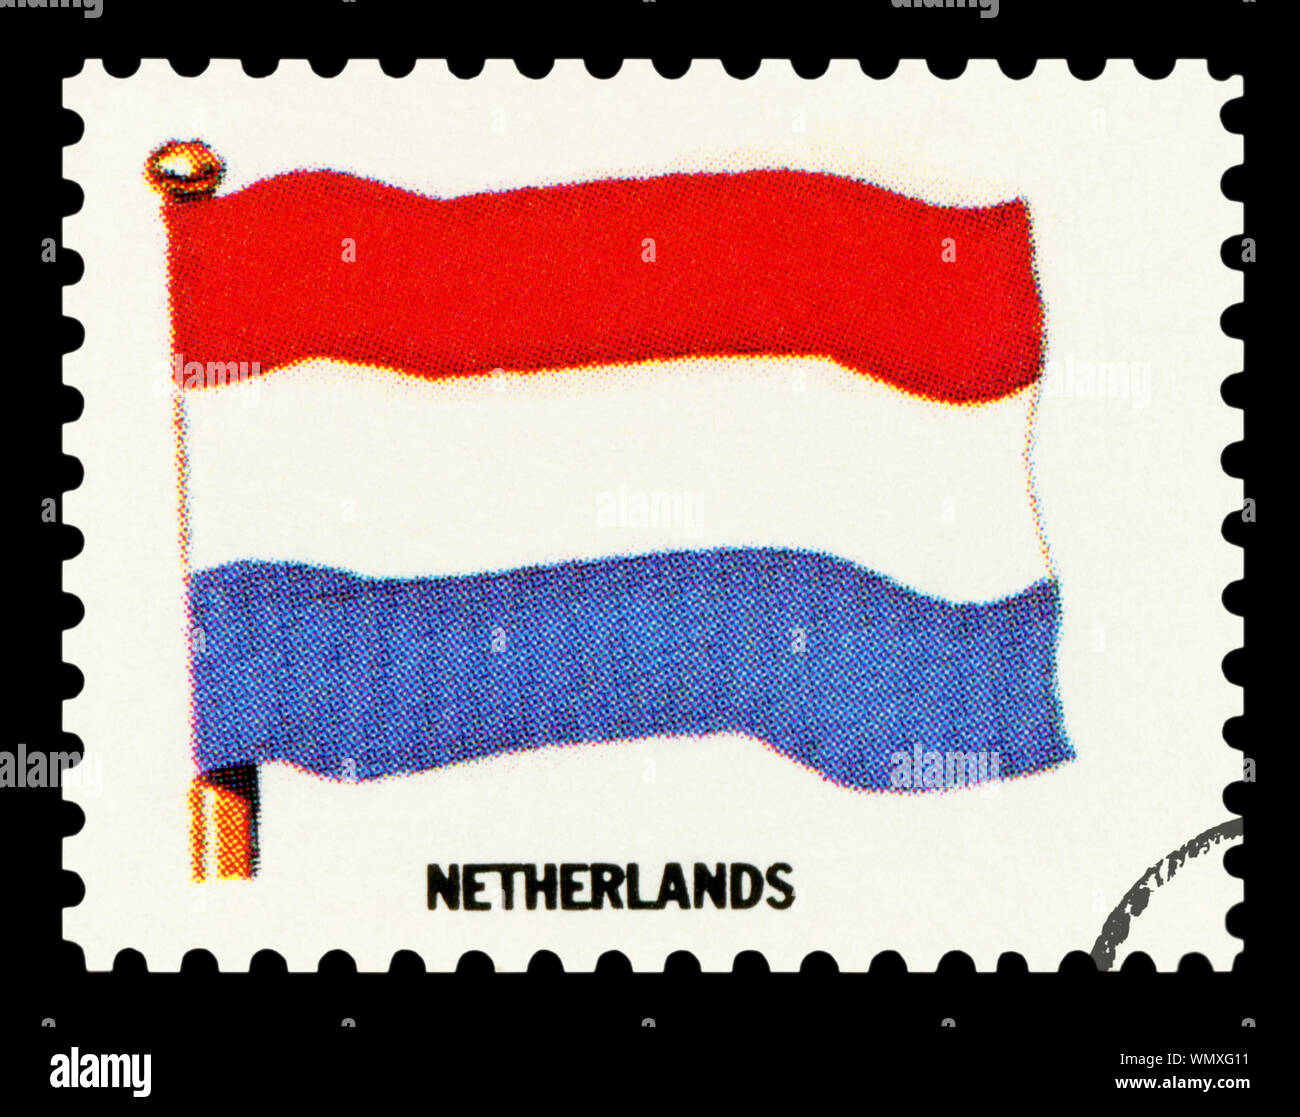 NETHERLANDS FLAG - Postage Stamp isolated on black background. Stock Photo